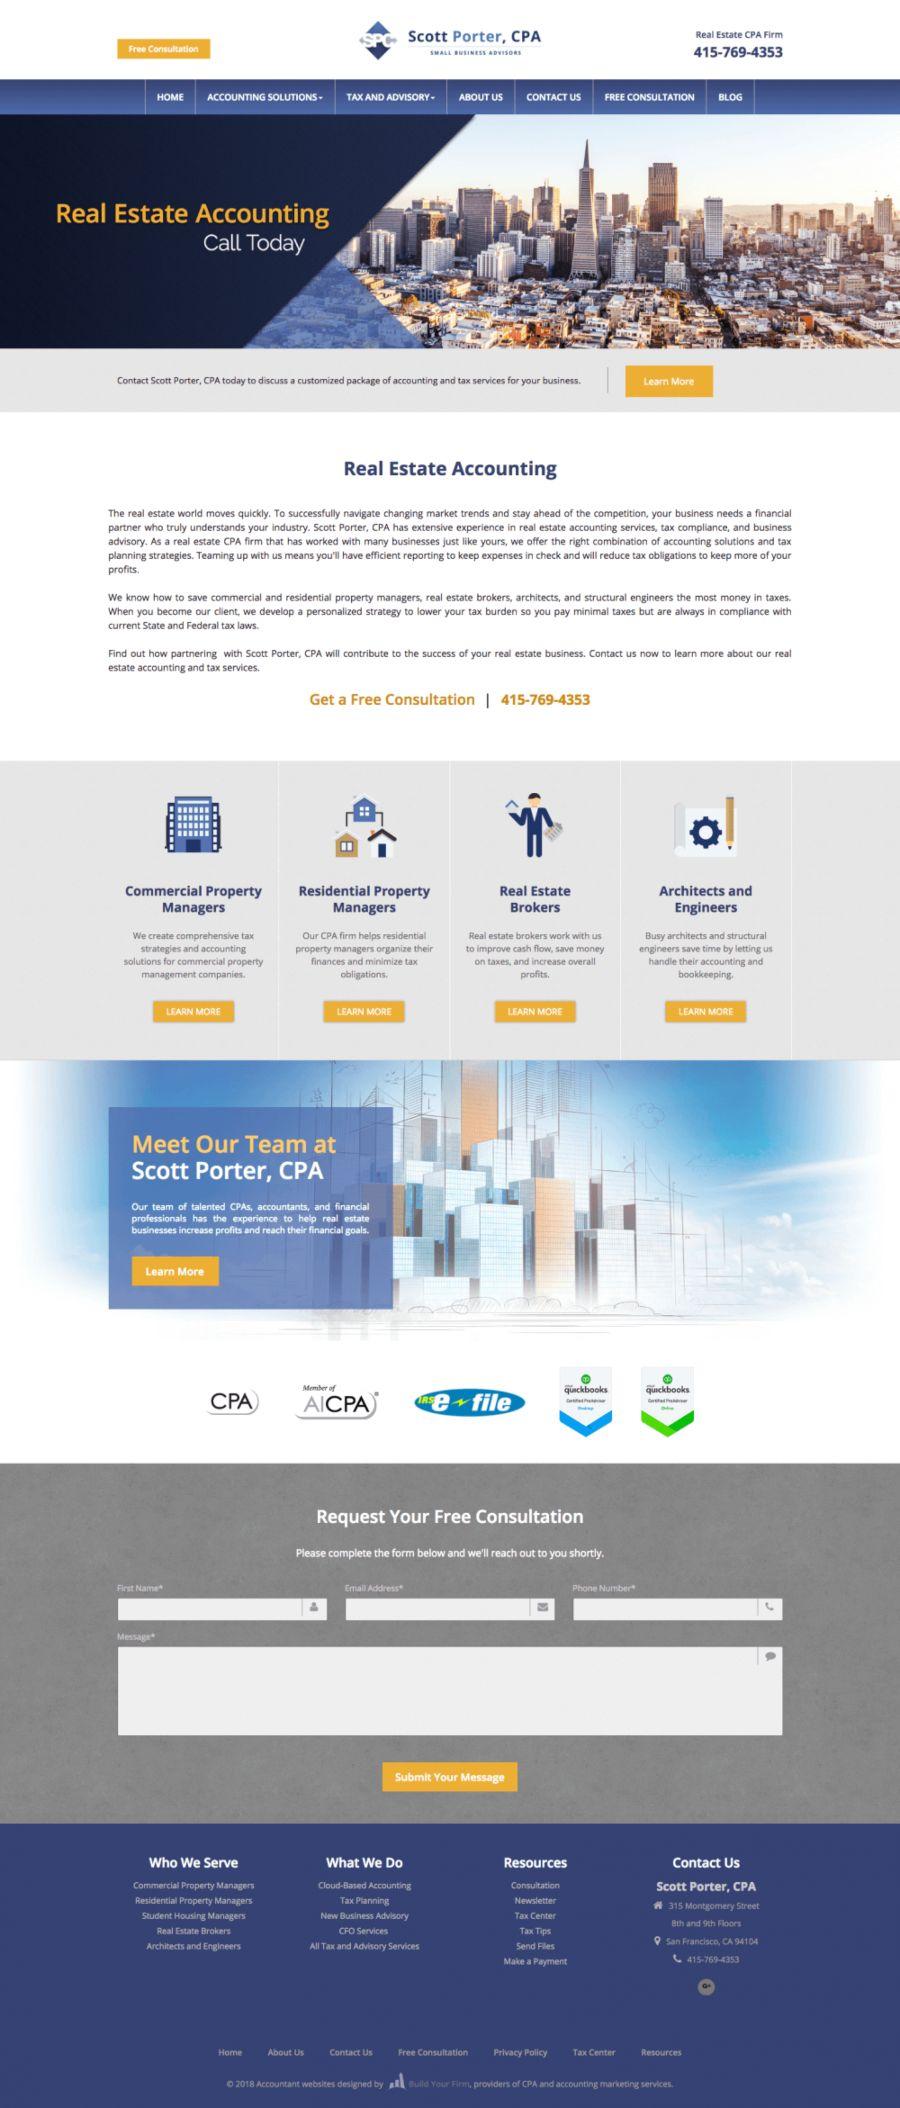 Website of Scott Porter, CPA